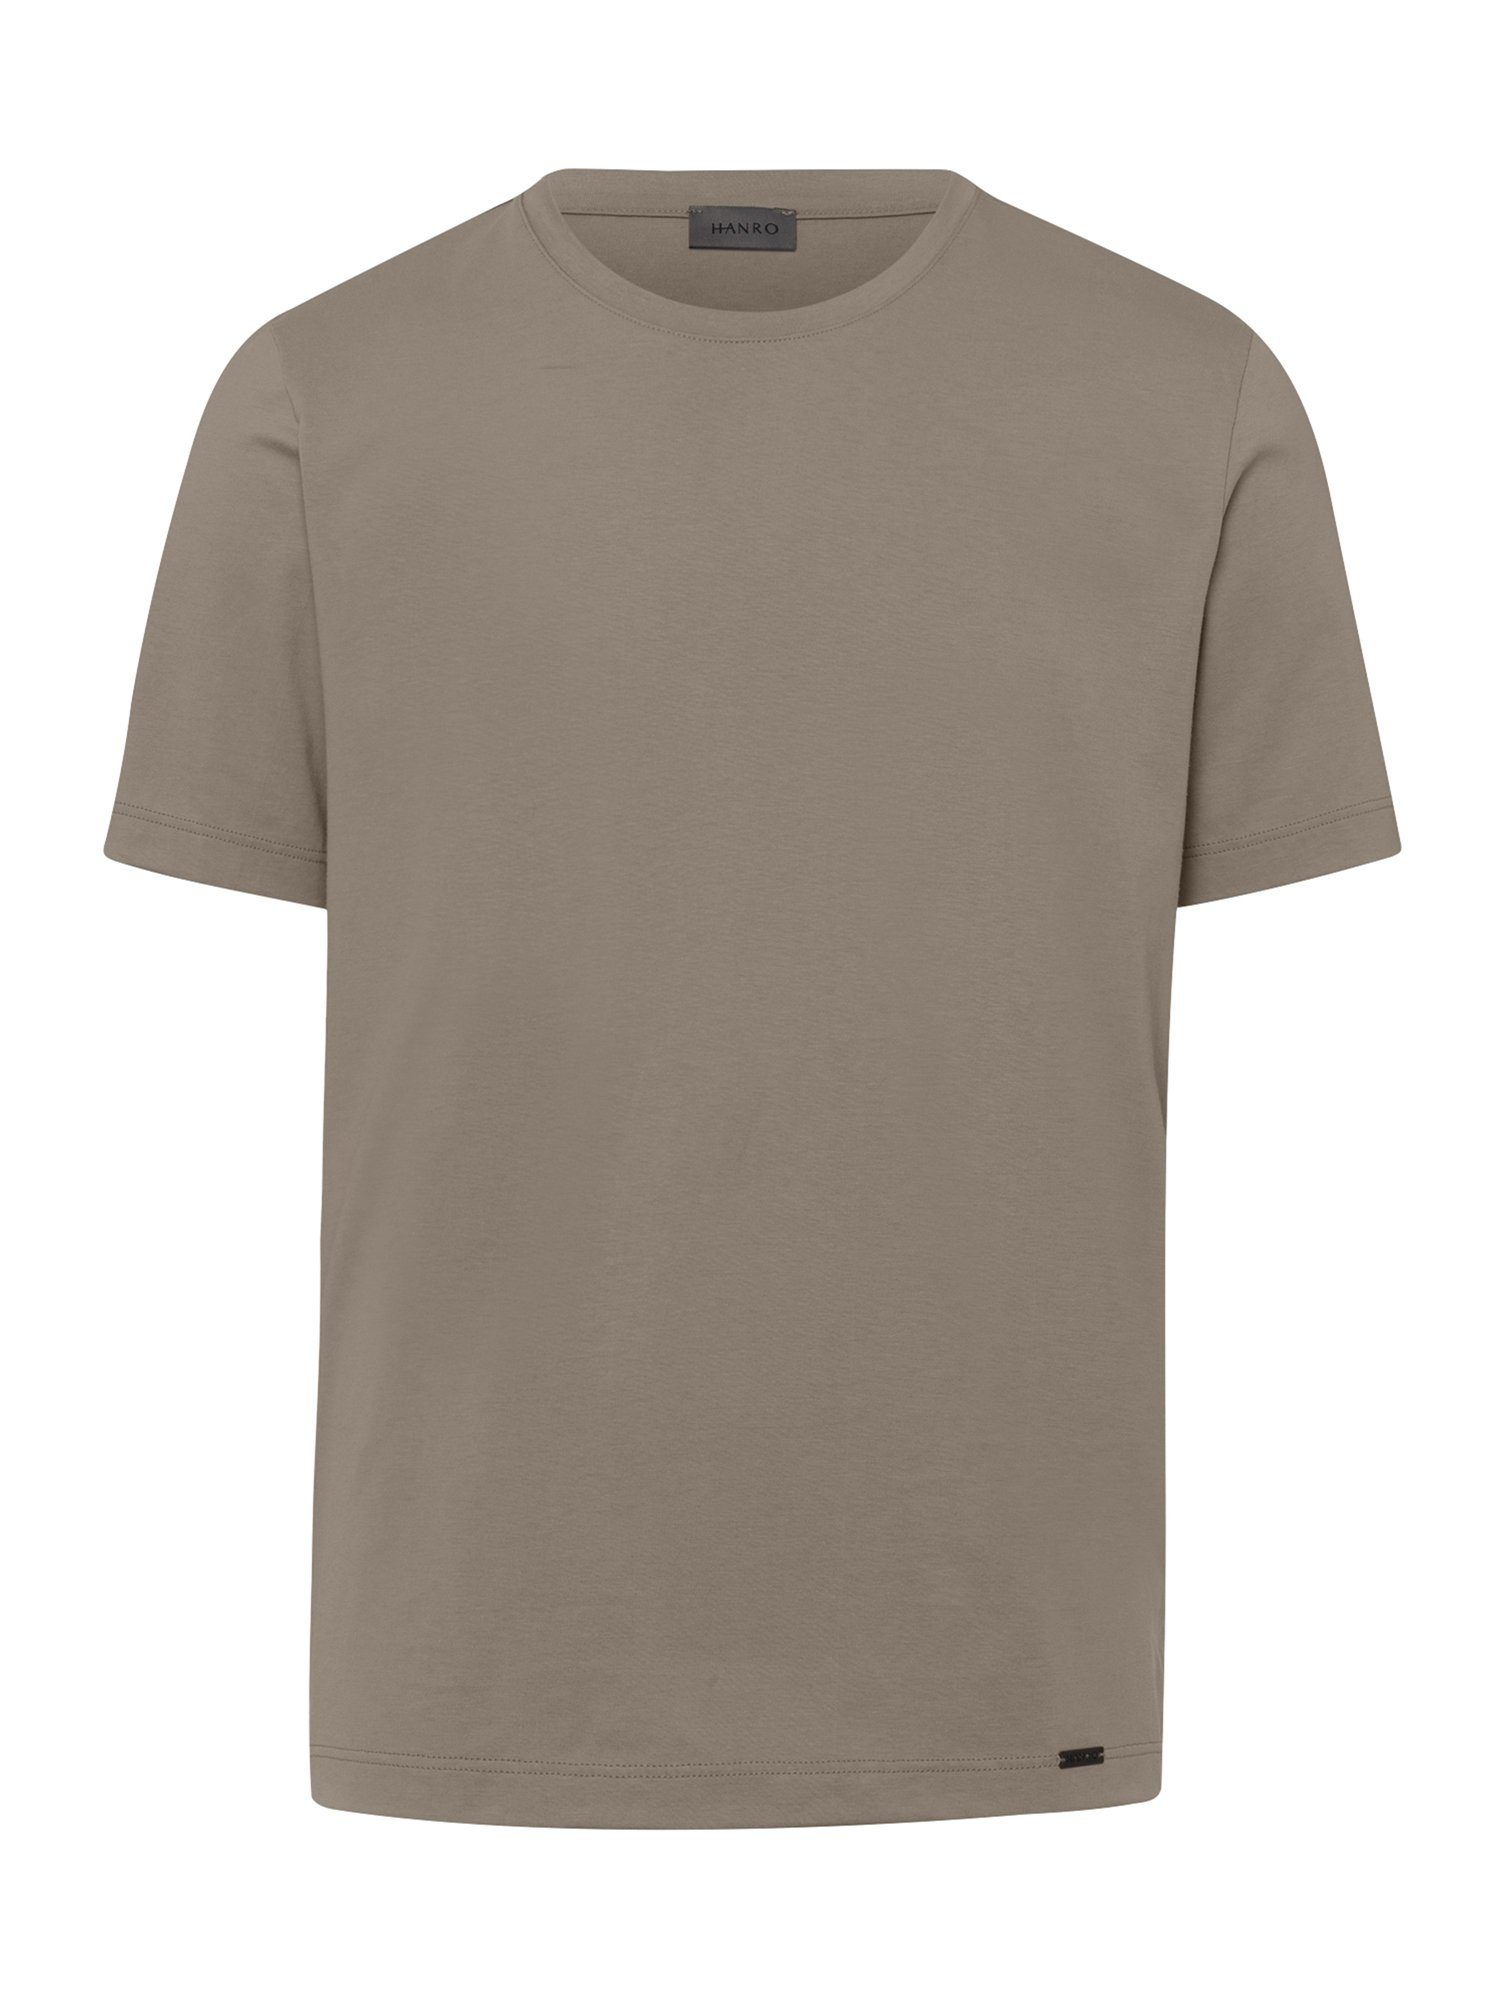 Hanro T-Shirt Living Shirts silver sand